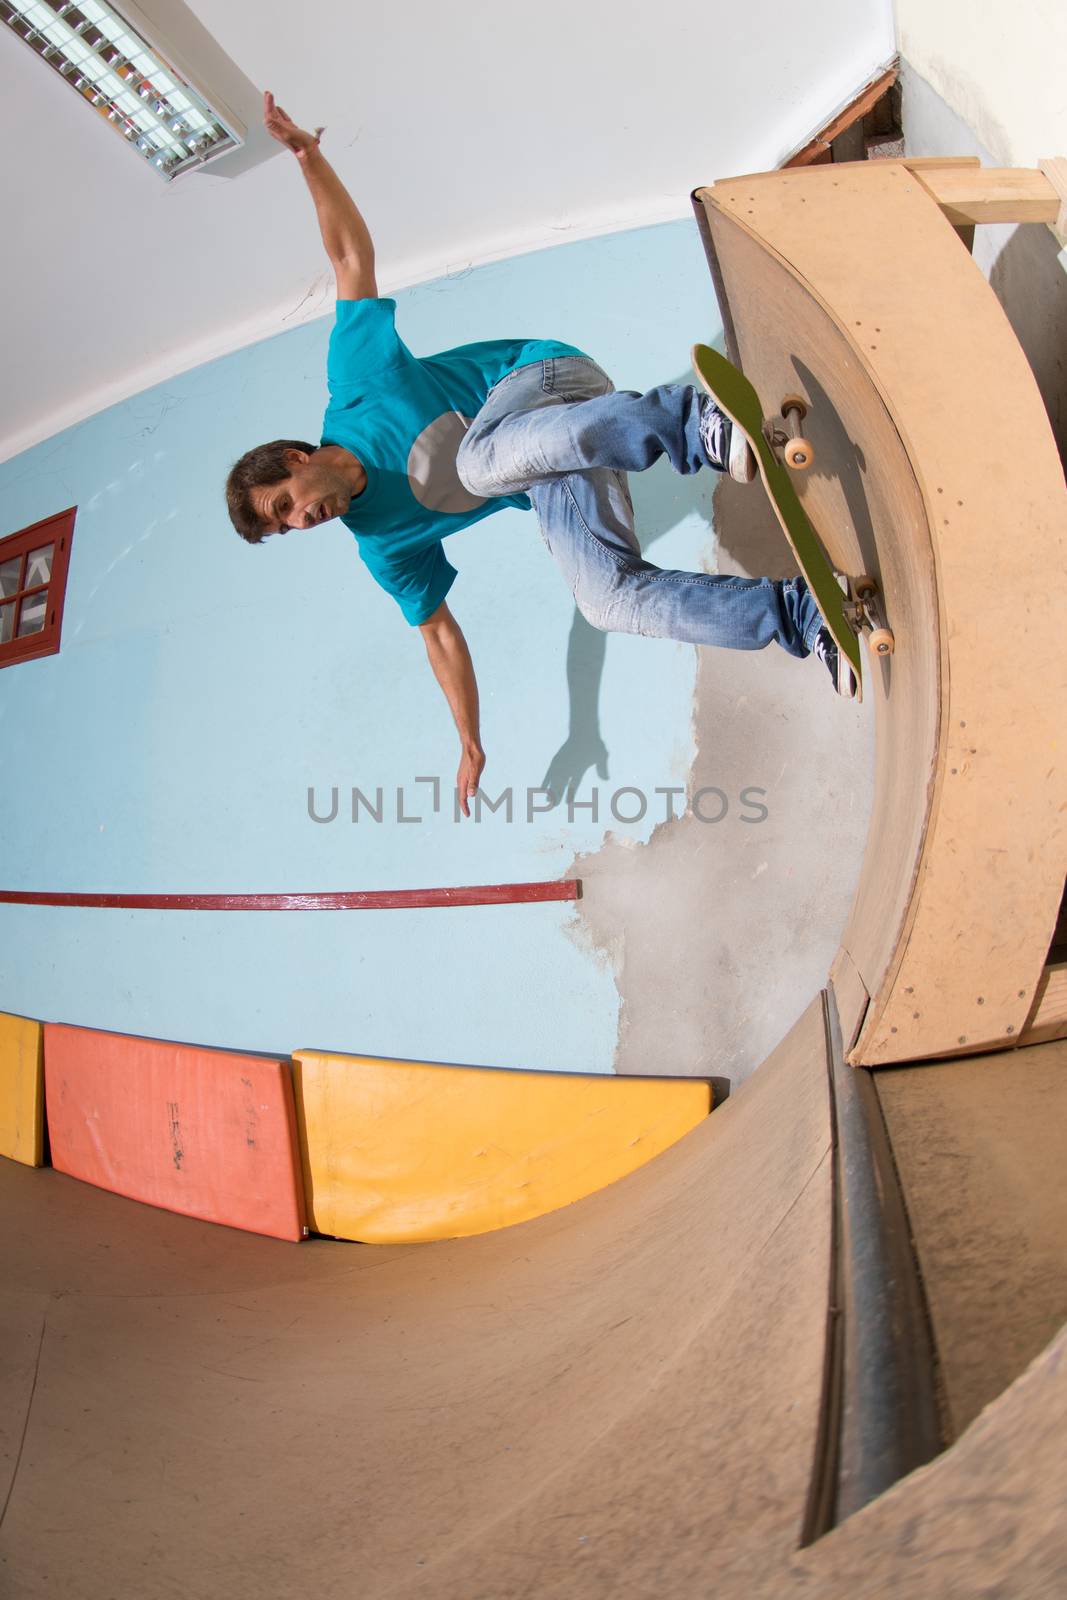 Skateboarder performing a backside turn by homydesign